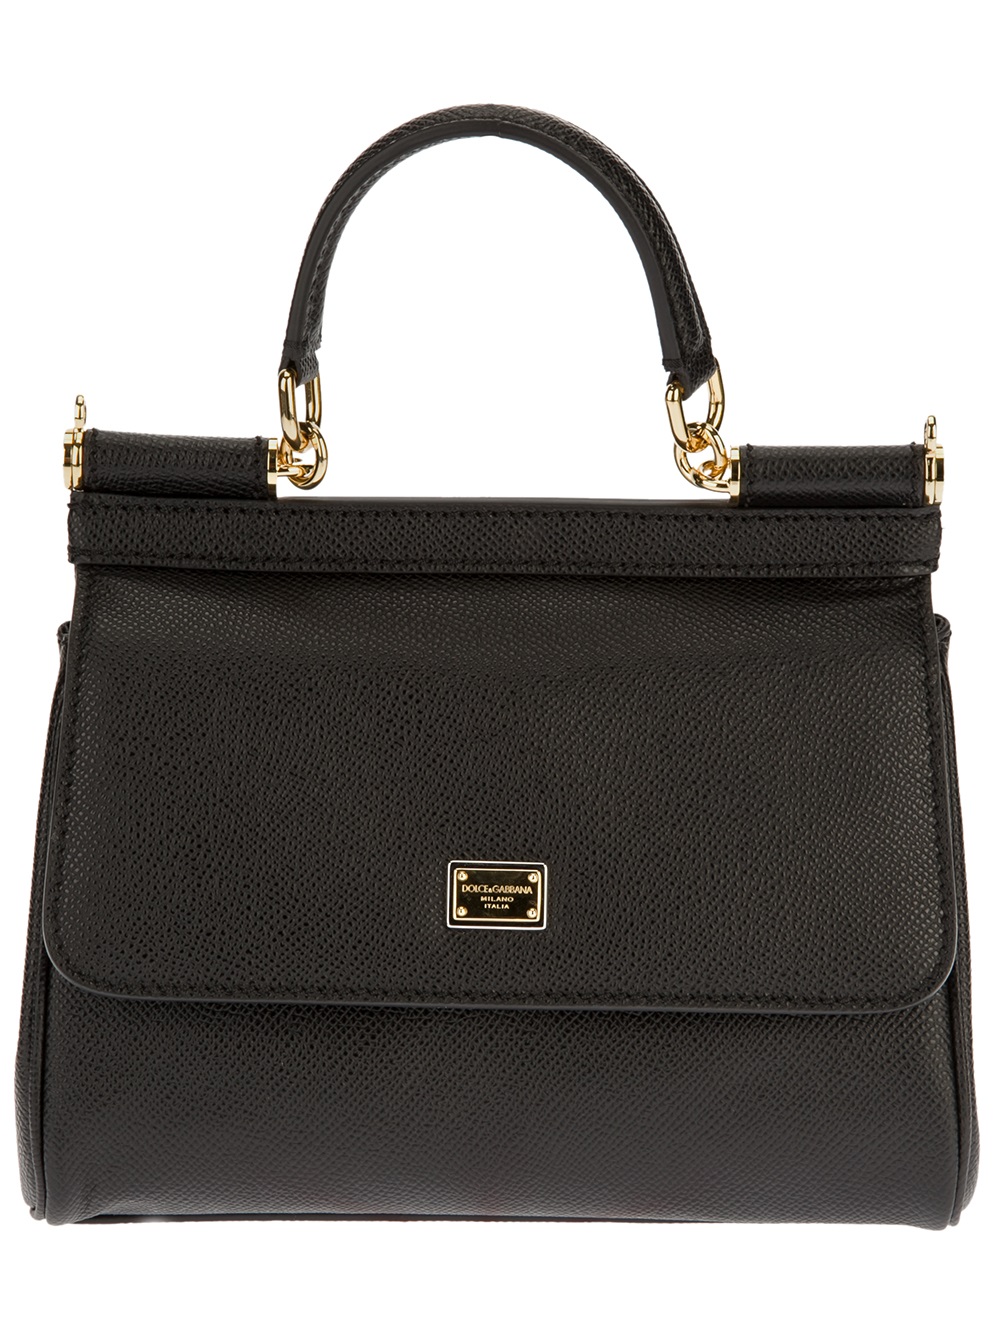 Dolce & Gabbana Miss Sicily Mini Shoulder Bag in Black - Lyst